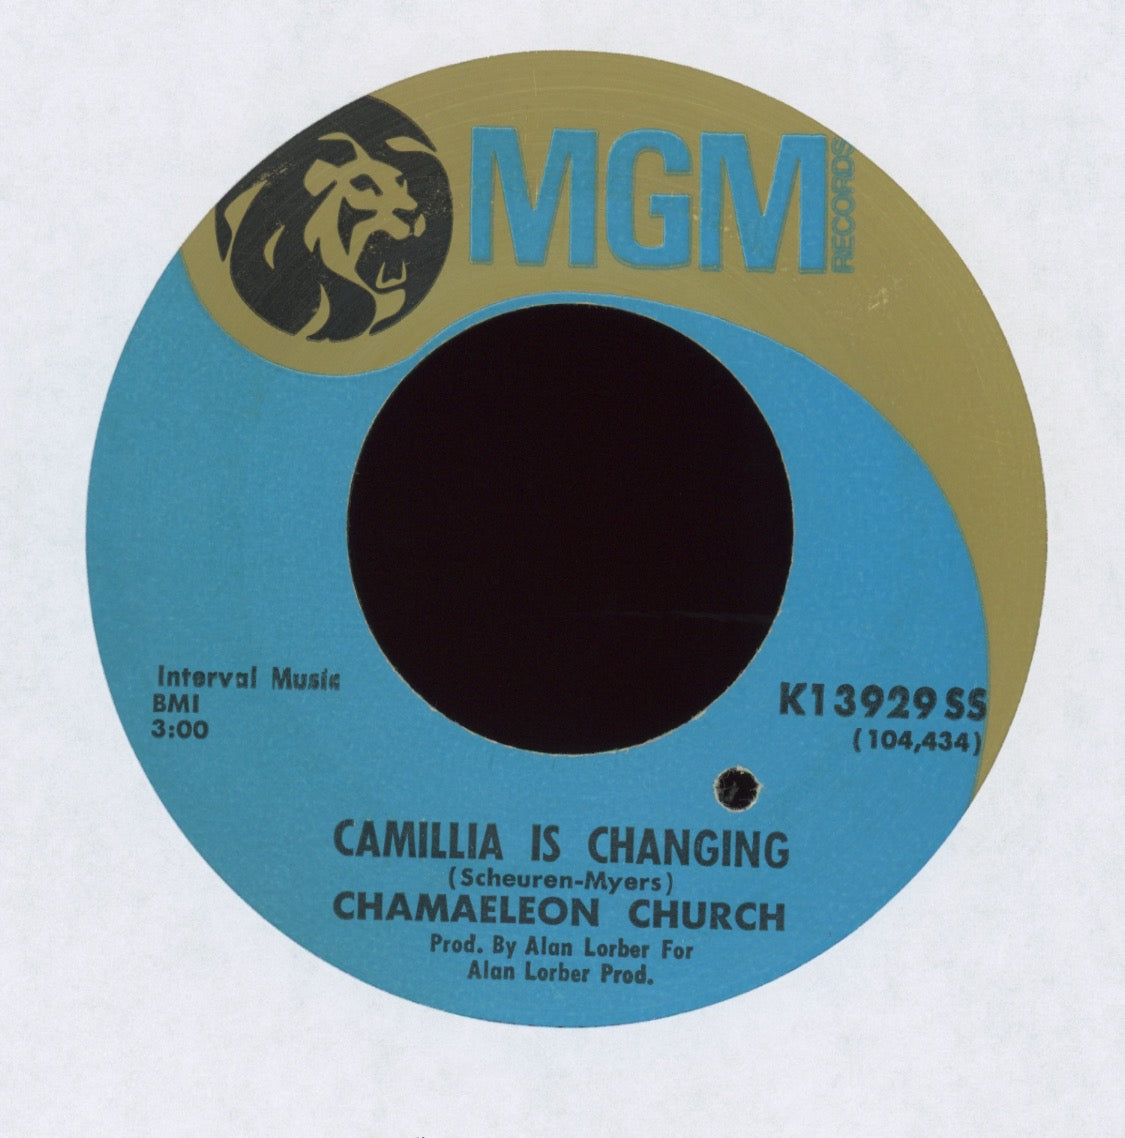 Chamaeleon Church - Camilla Is Changing on MGM